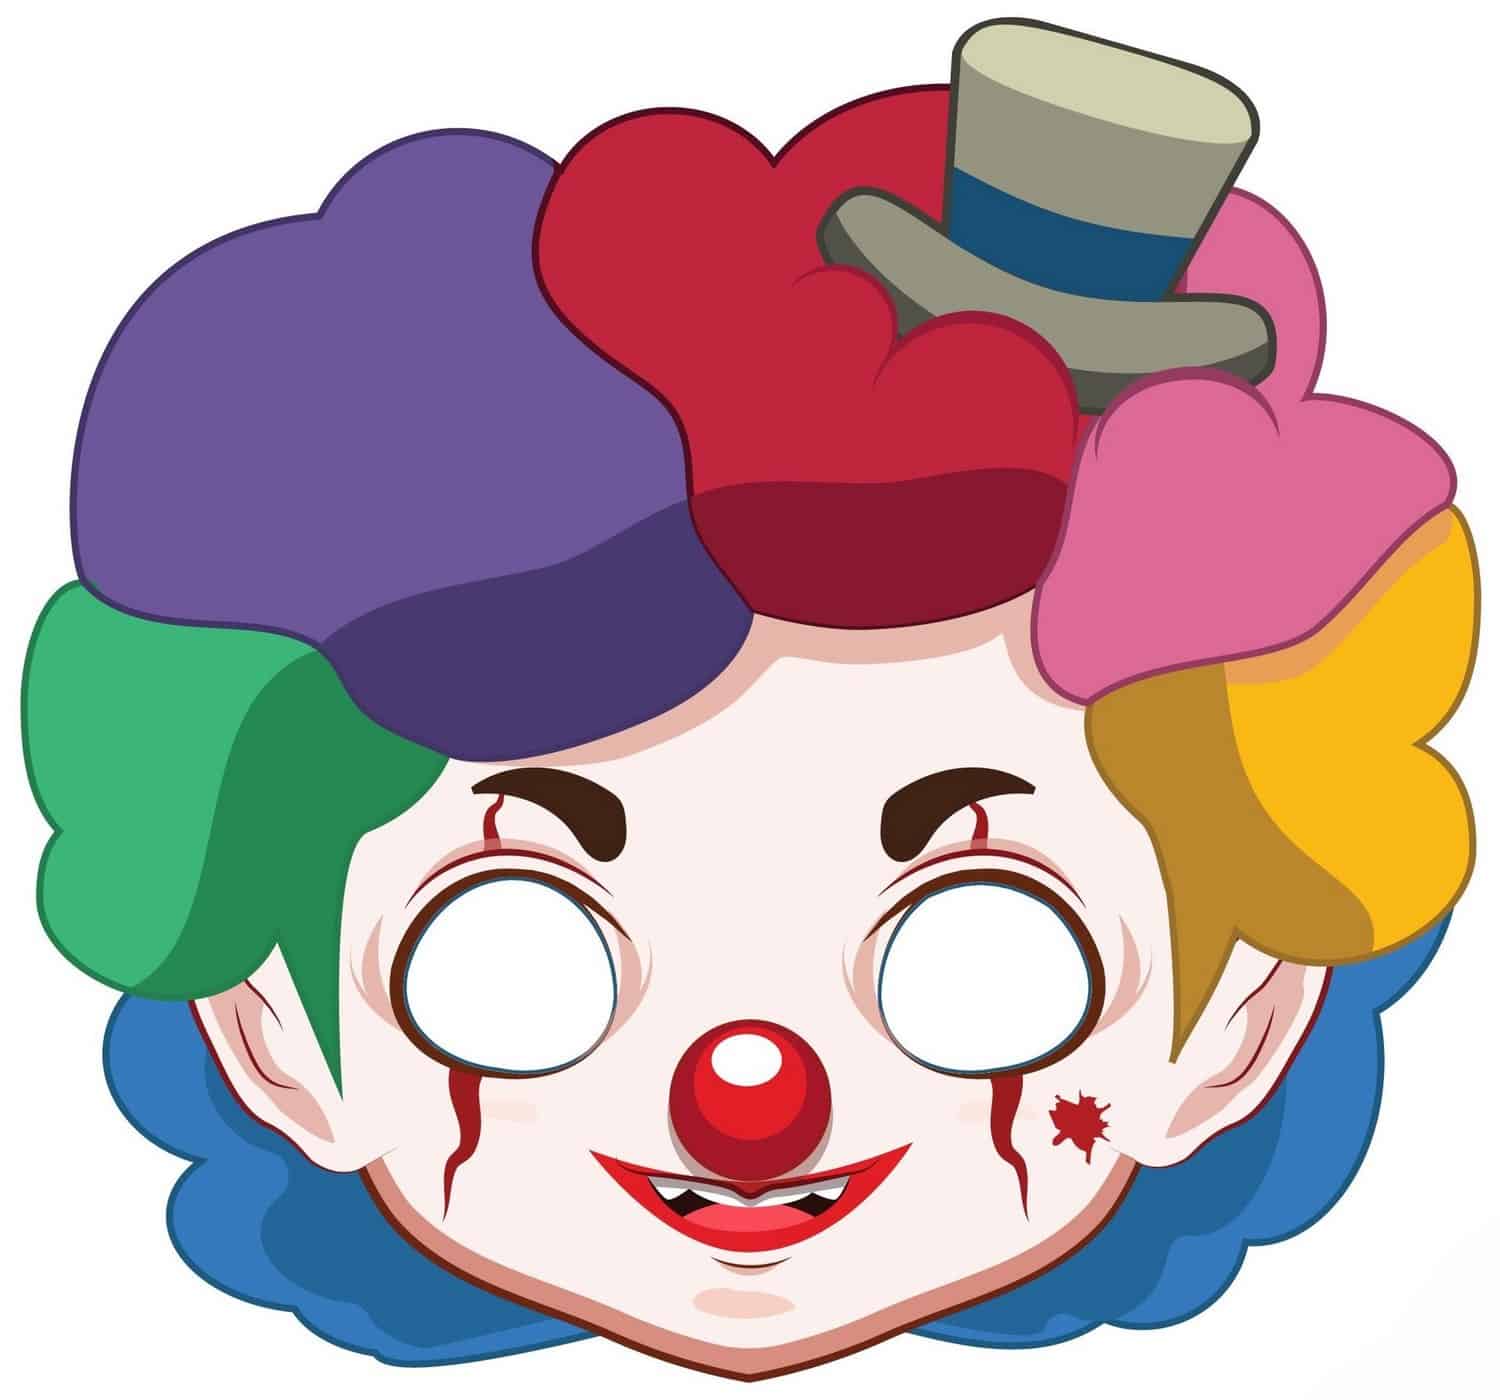 masque clown halloween